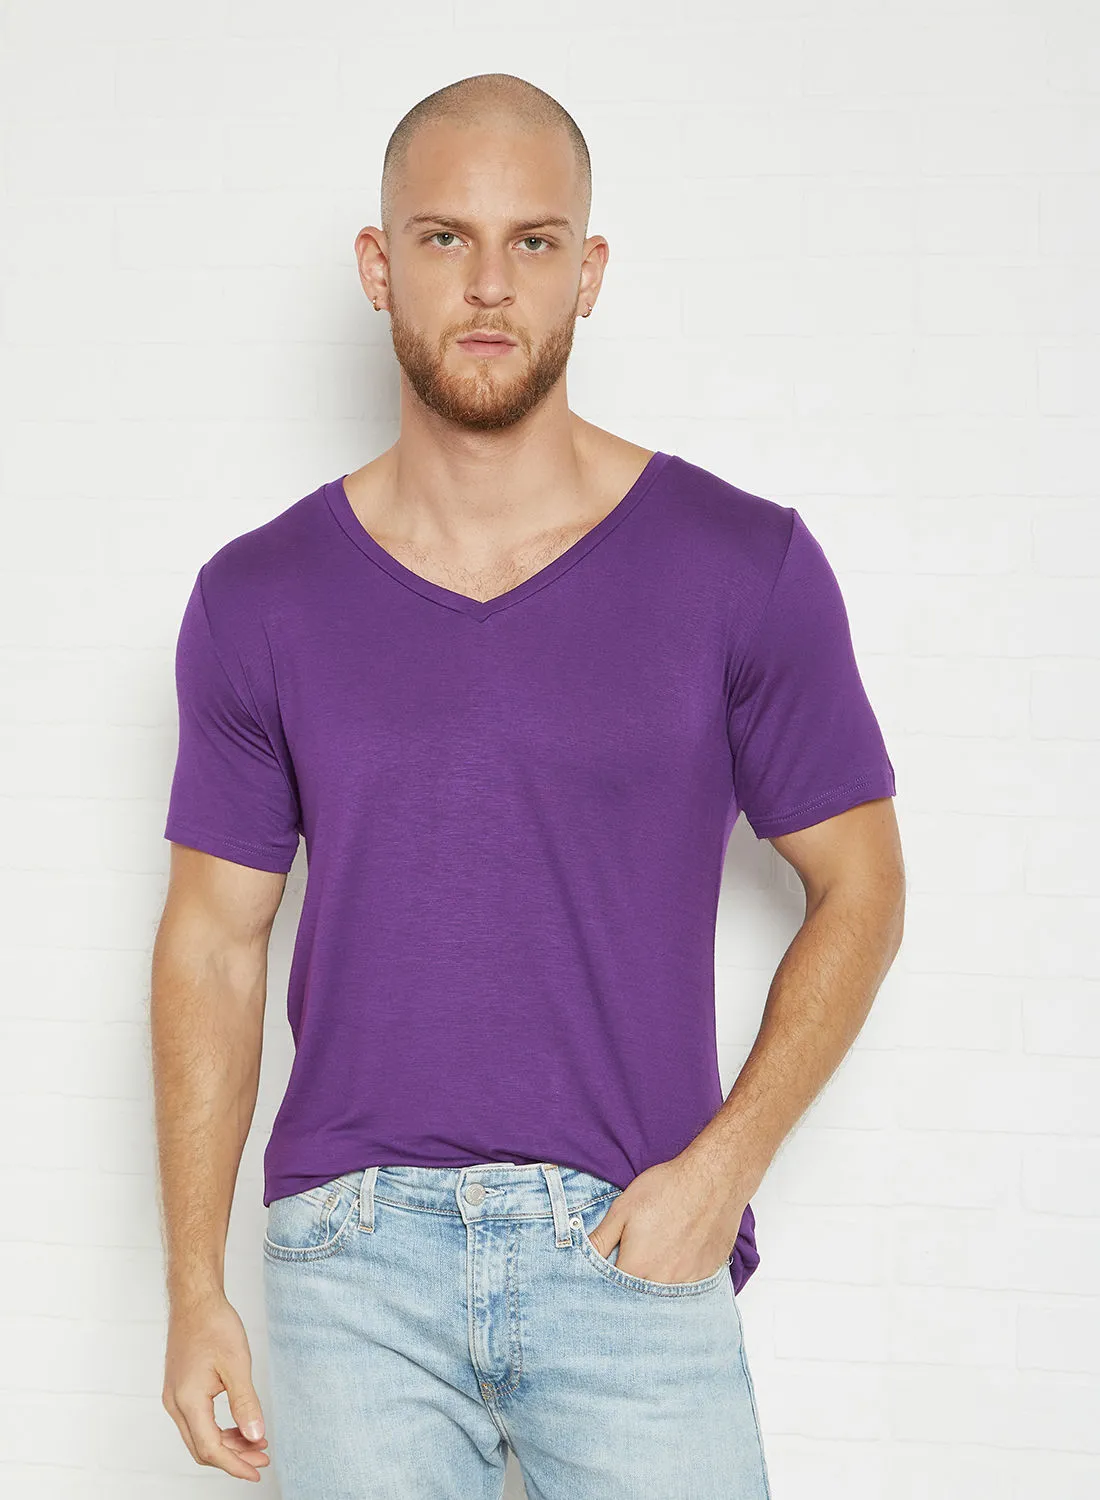 STATE 8 V-Neck T-Shirt Light Purple